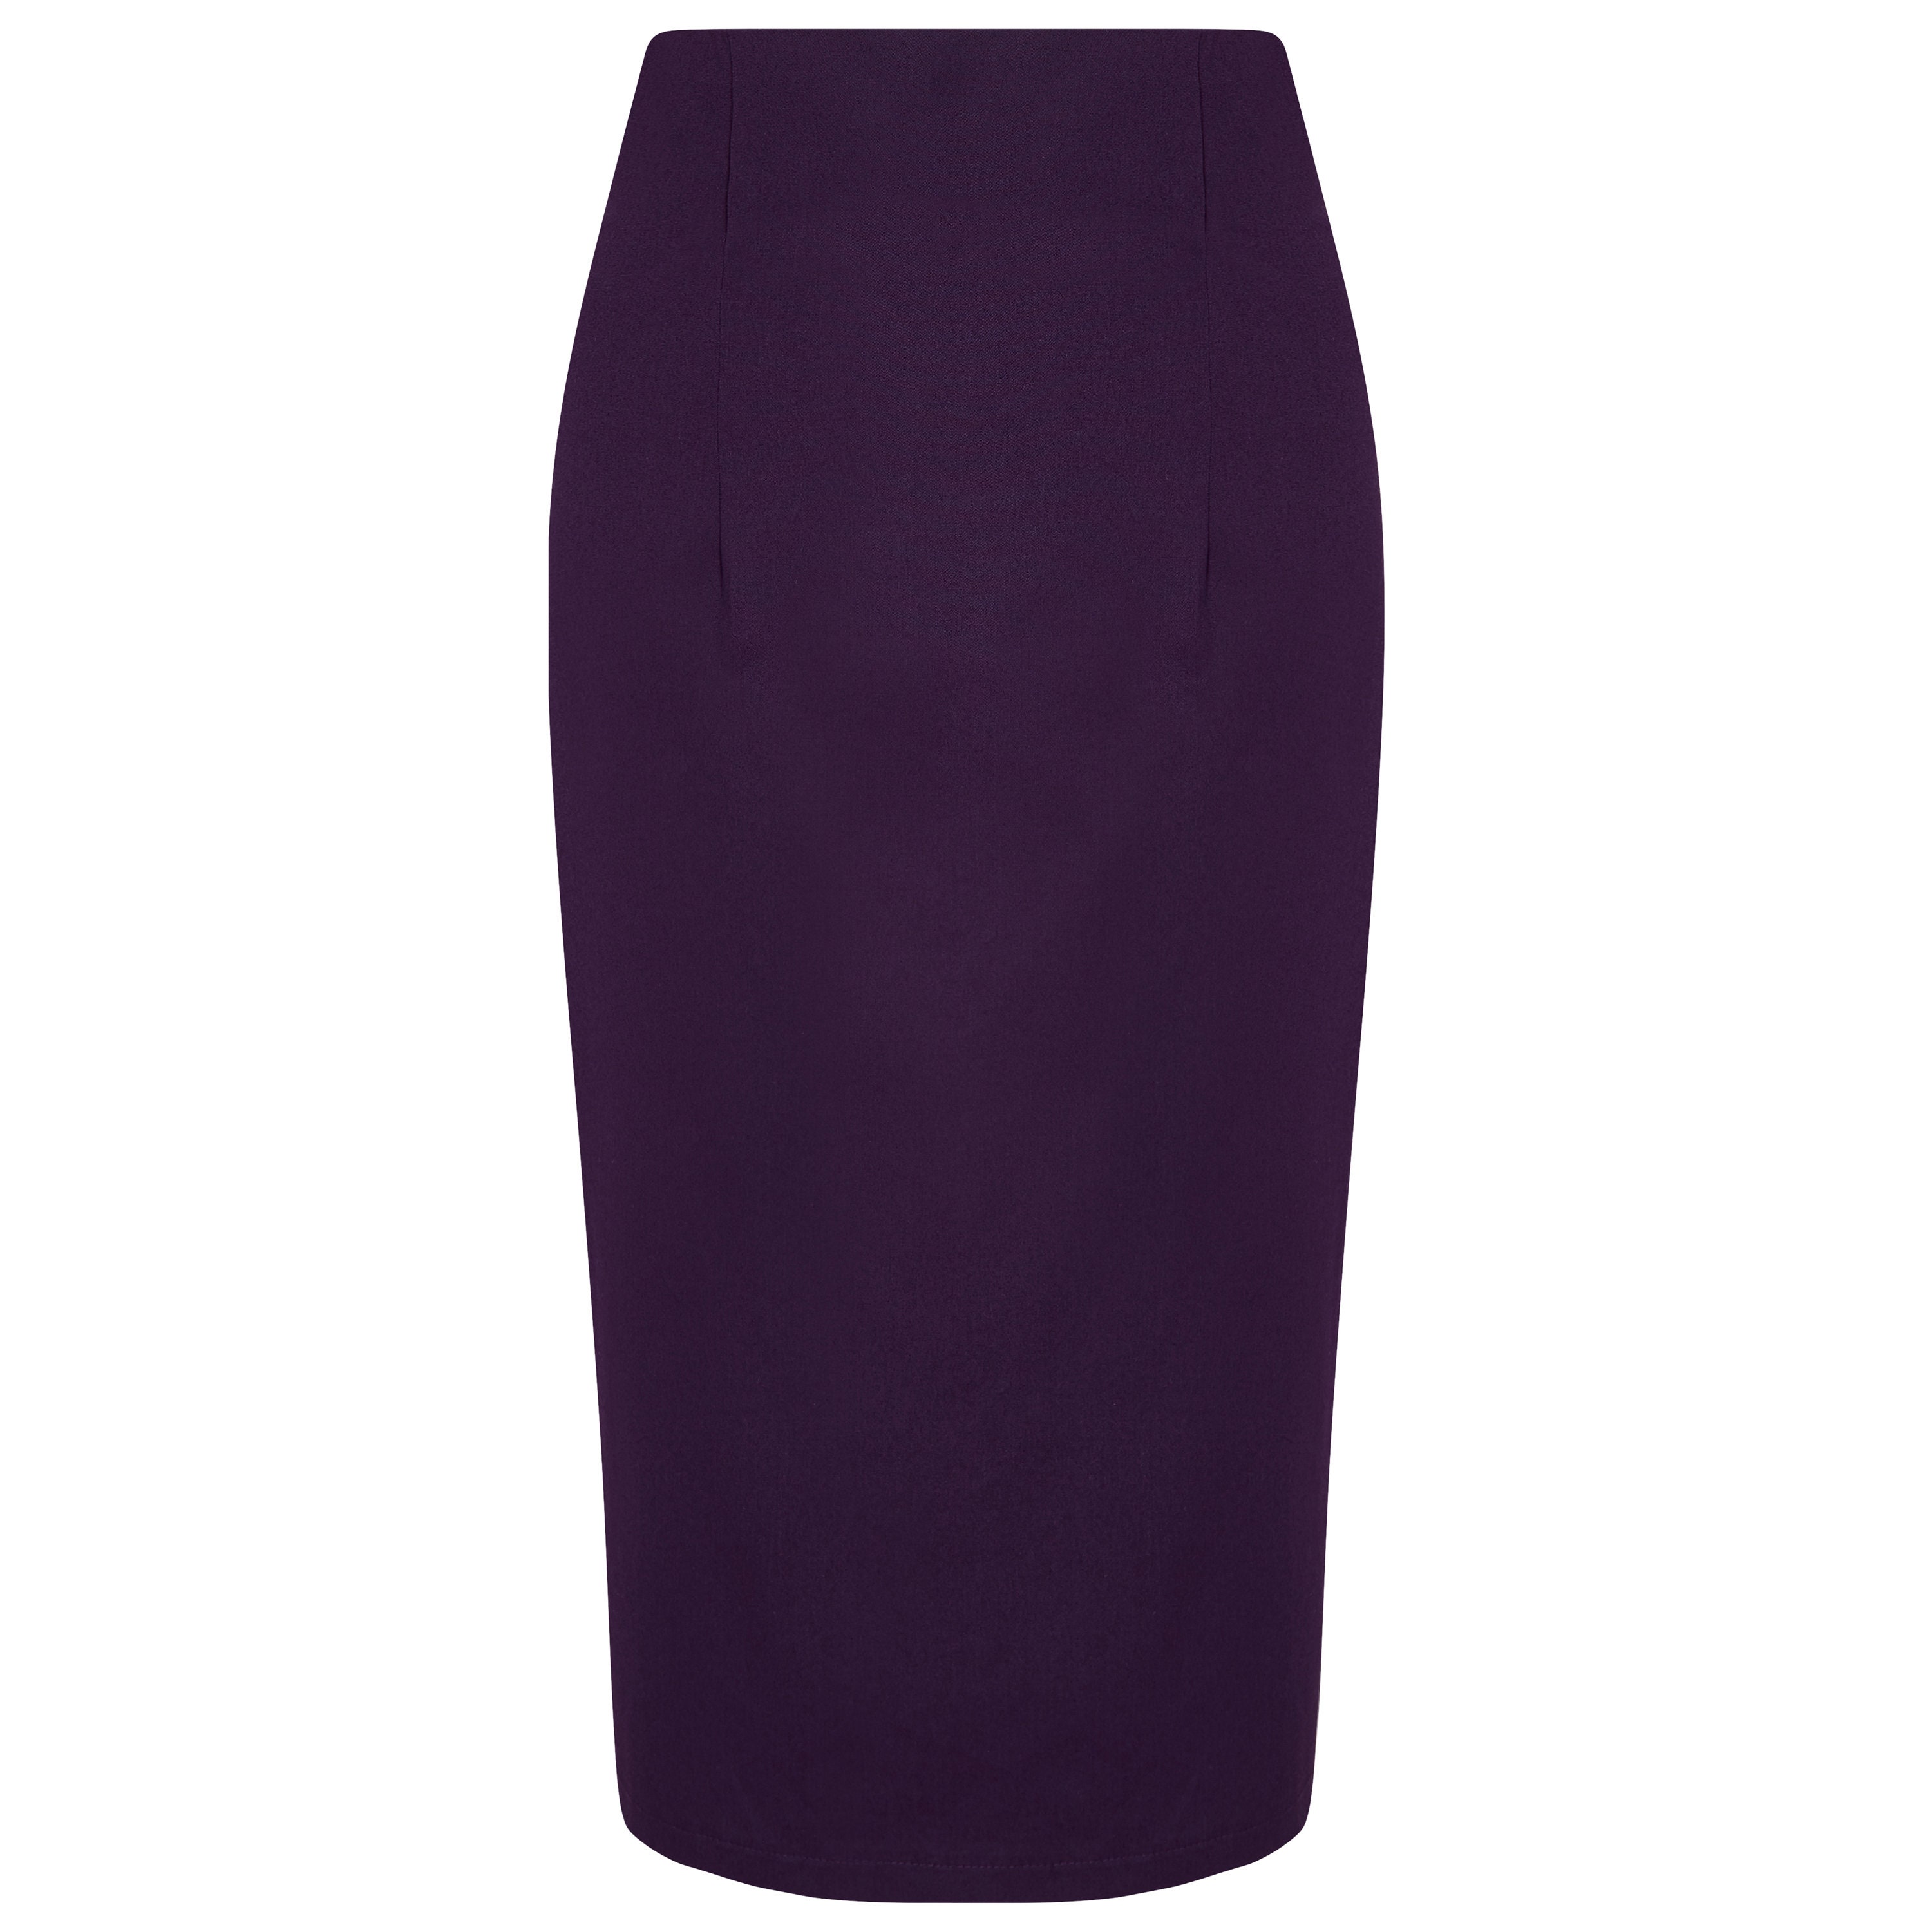 PATRORNA Purple Above Knee Skirt